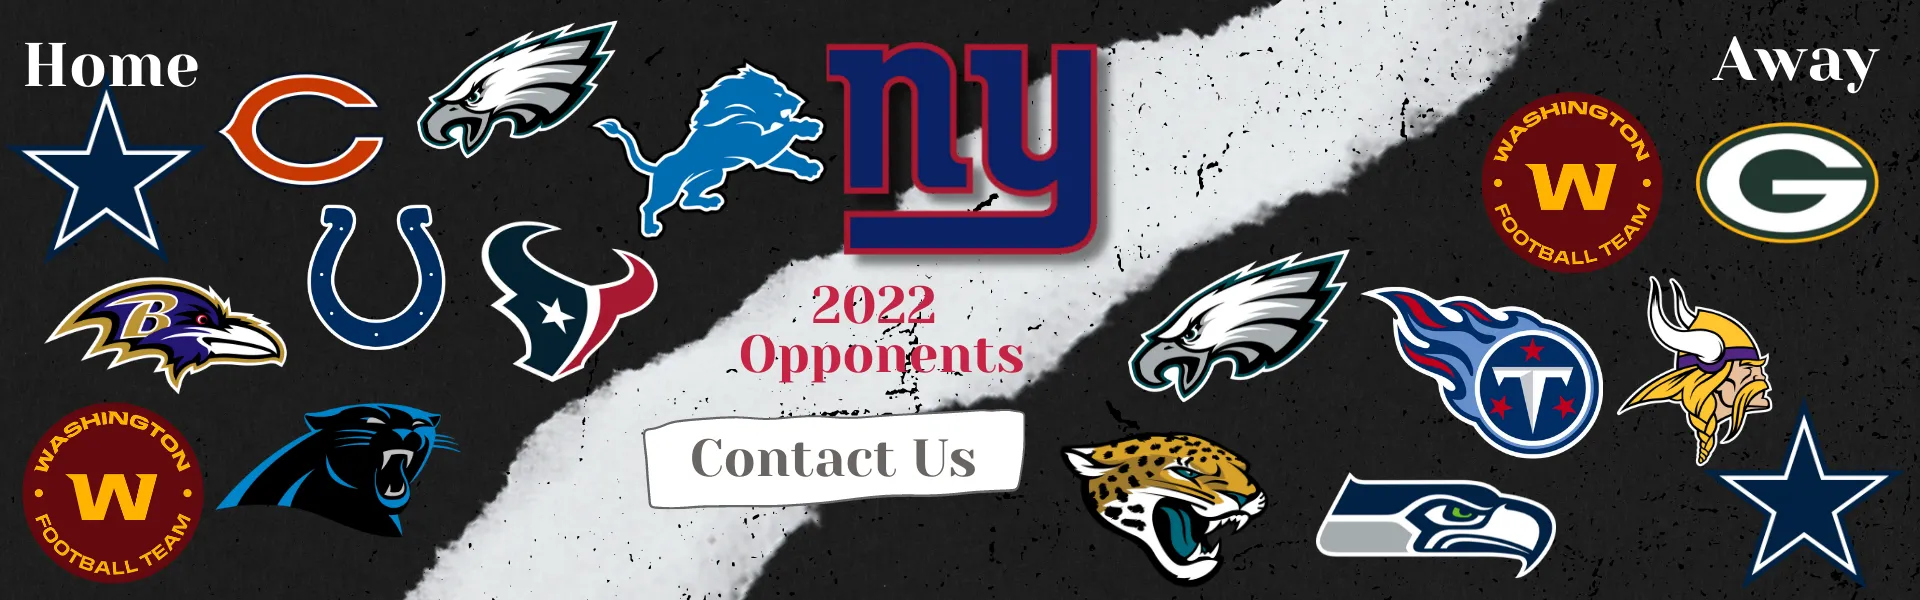 New York Giants 2022 opponents